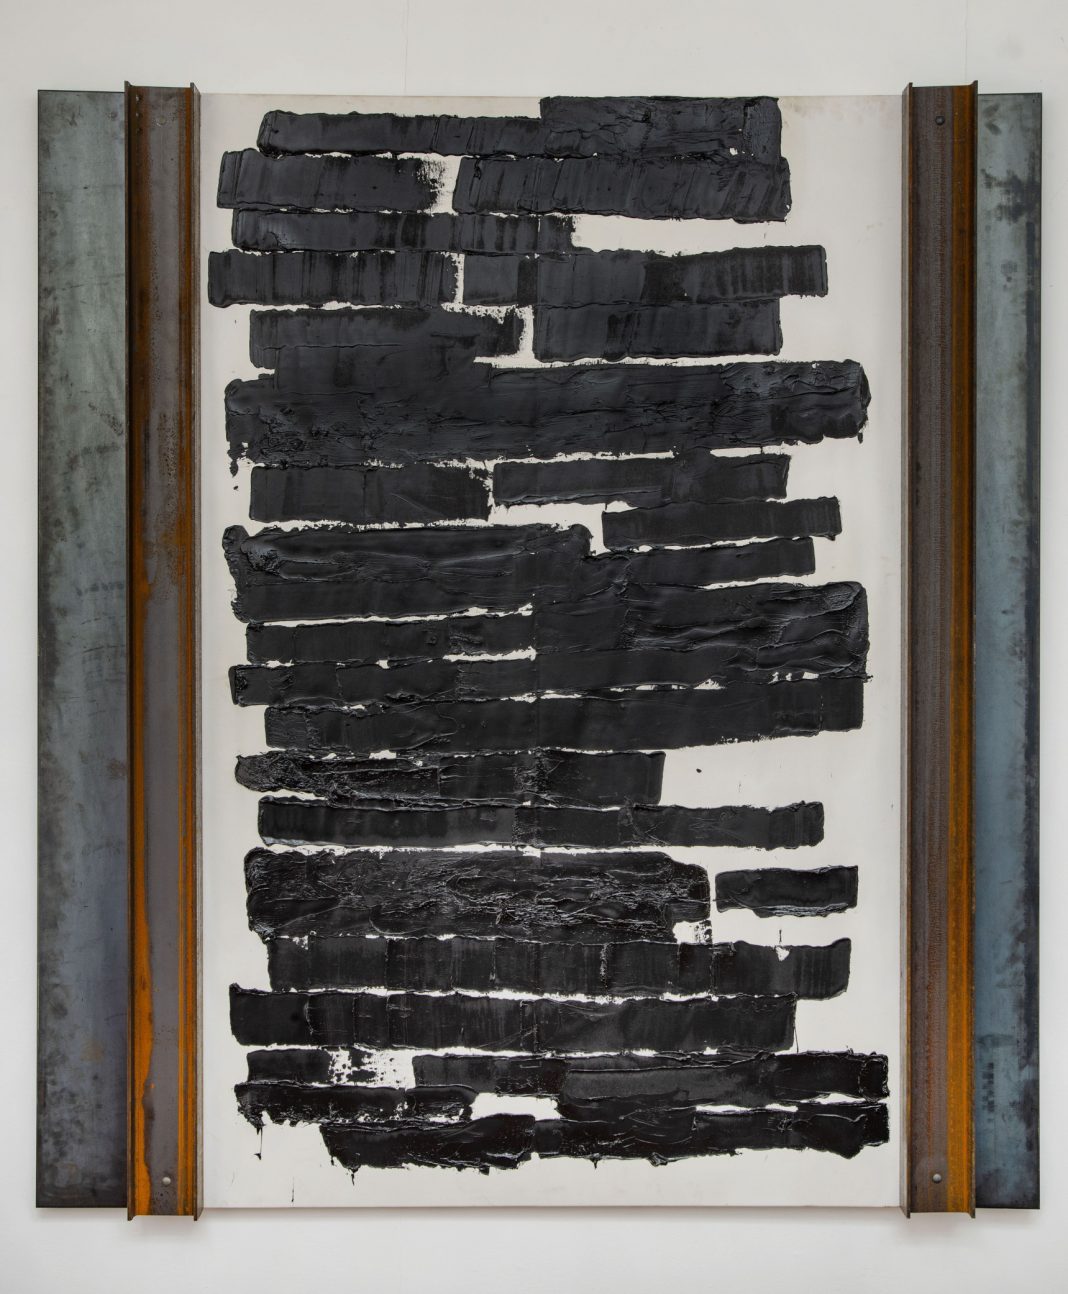 Jannis Kounellis. Five works/Virtual Showhttps://www.exibart.com/repository/media/formidable/11/painting2014-1068x1294.jpg